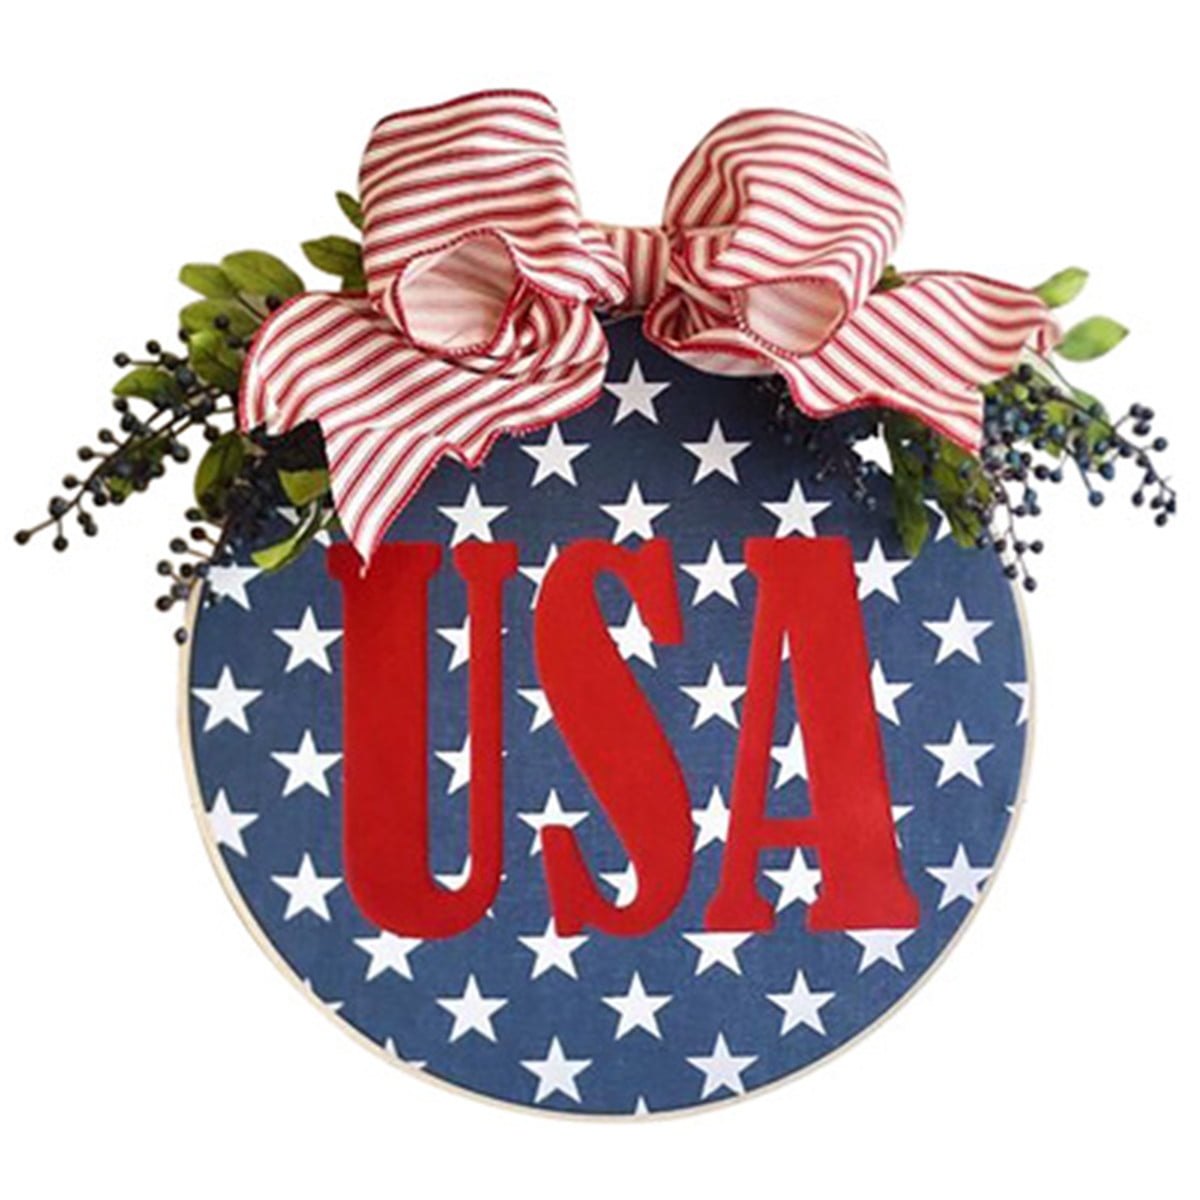 I Love the USA Wreath